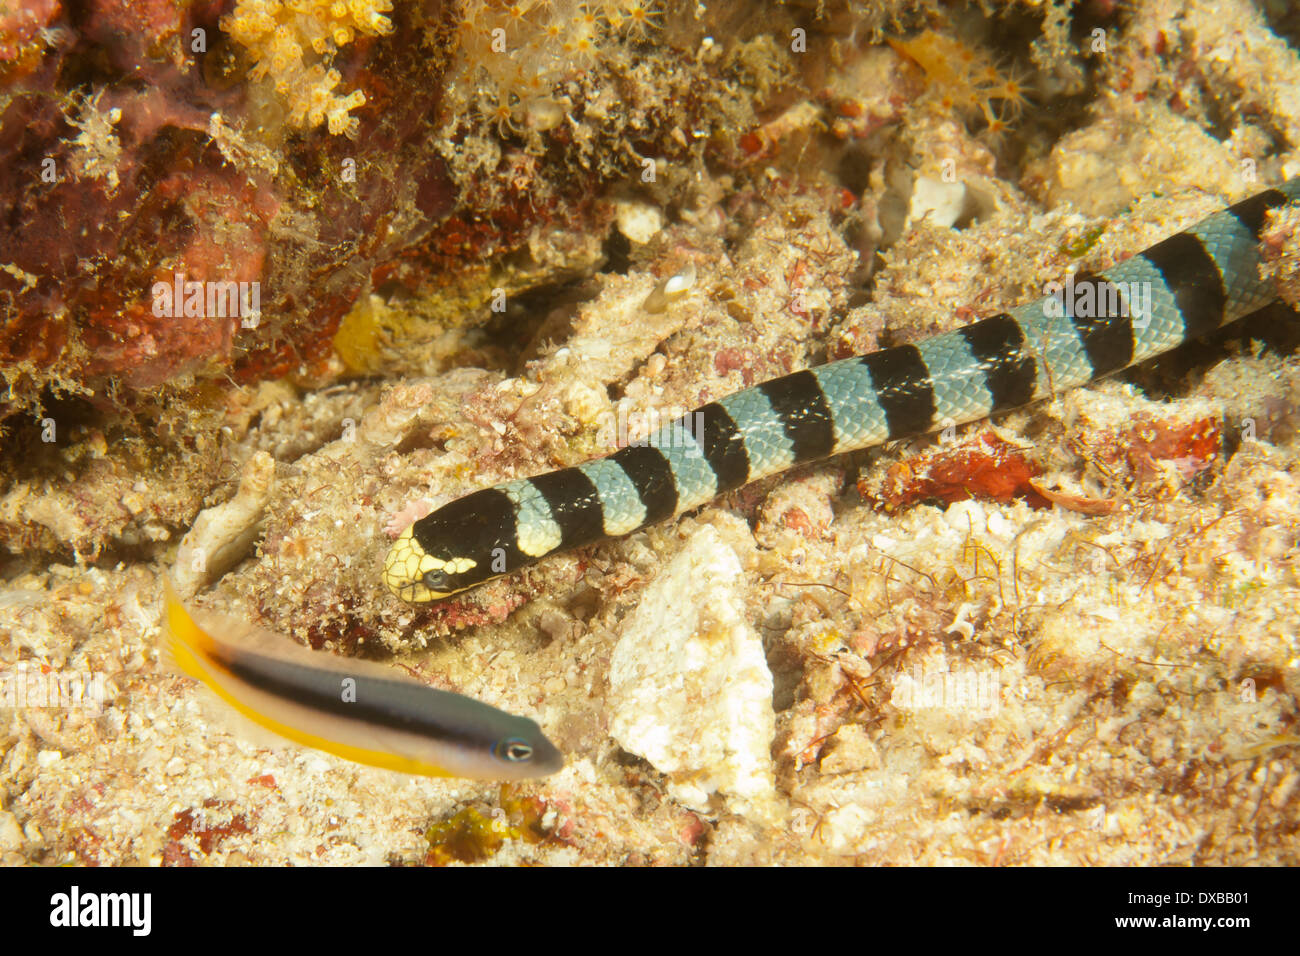 La serpiente de mar, Citrus Ridge sitio de buceo, Isla, Raja Ampat Tanjung, Indonesia Foto de stock